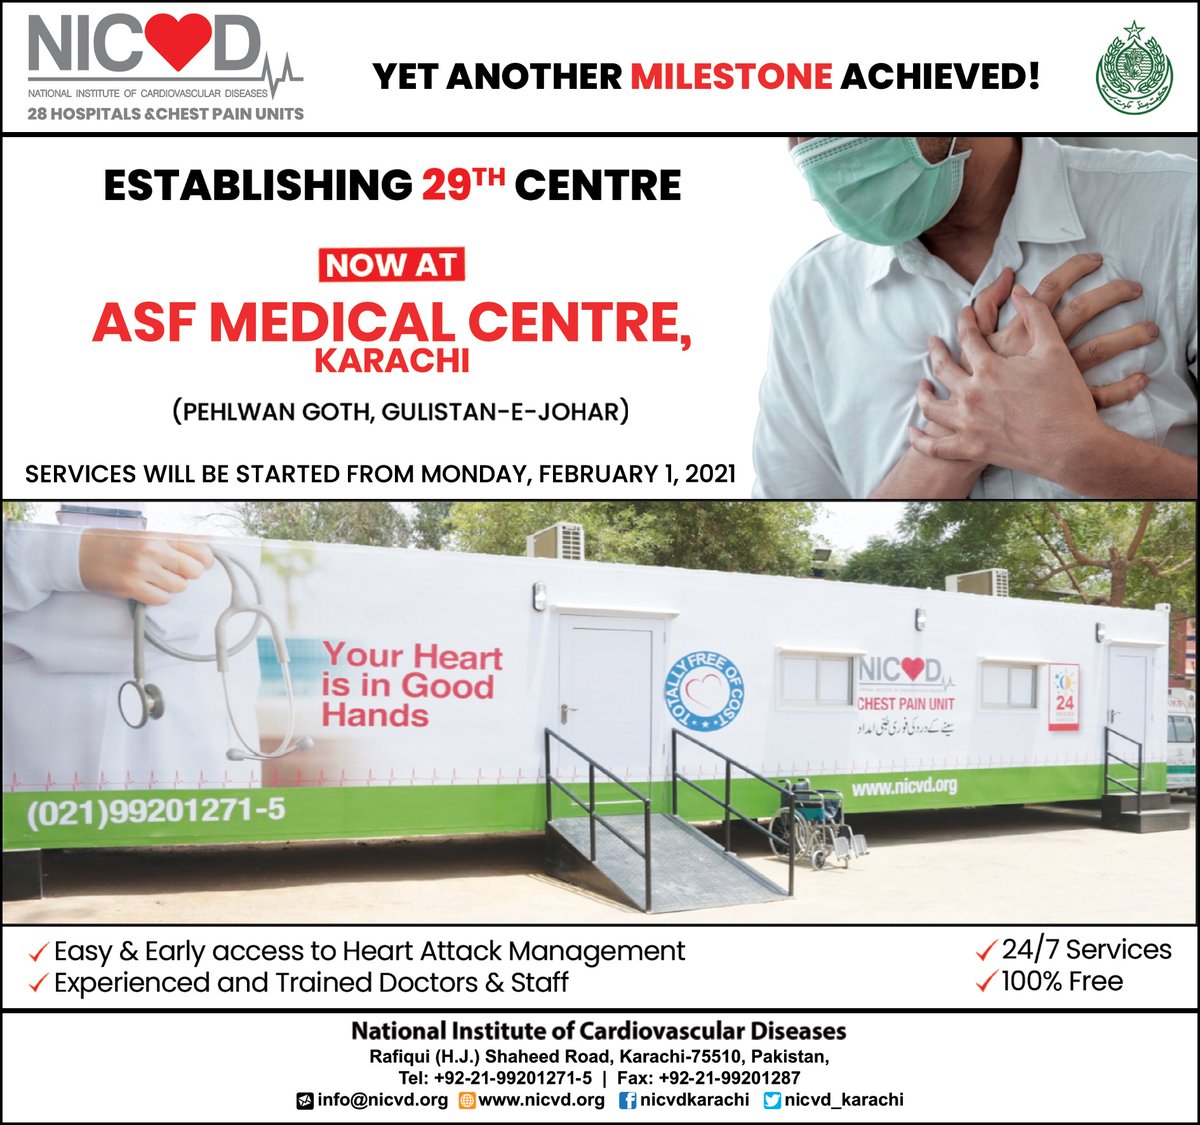 Yet another milestone achieved!
Establishing 29th centre now at ASF Medical Centre, Karachi (Pehlwan Goth, Gulistan e Johar).

#NICVD #ChestPainUnit #QualityTreatment #FreeOfCost